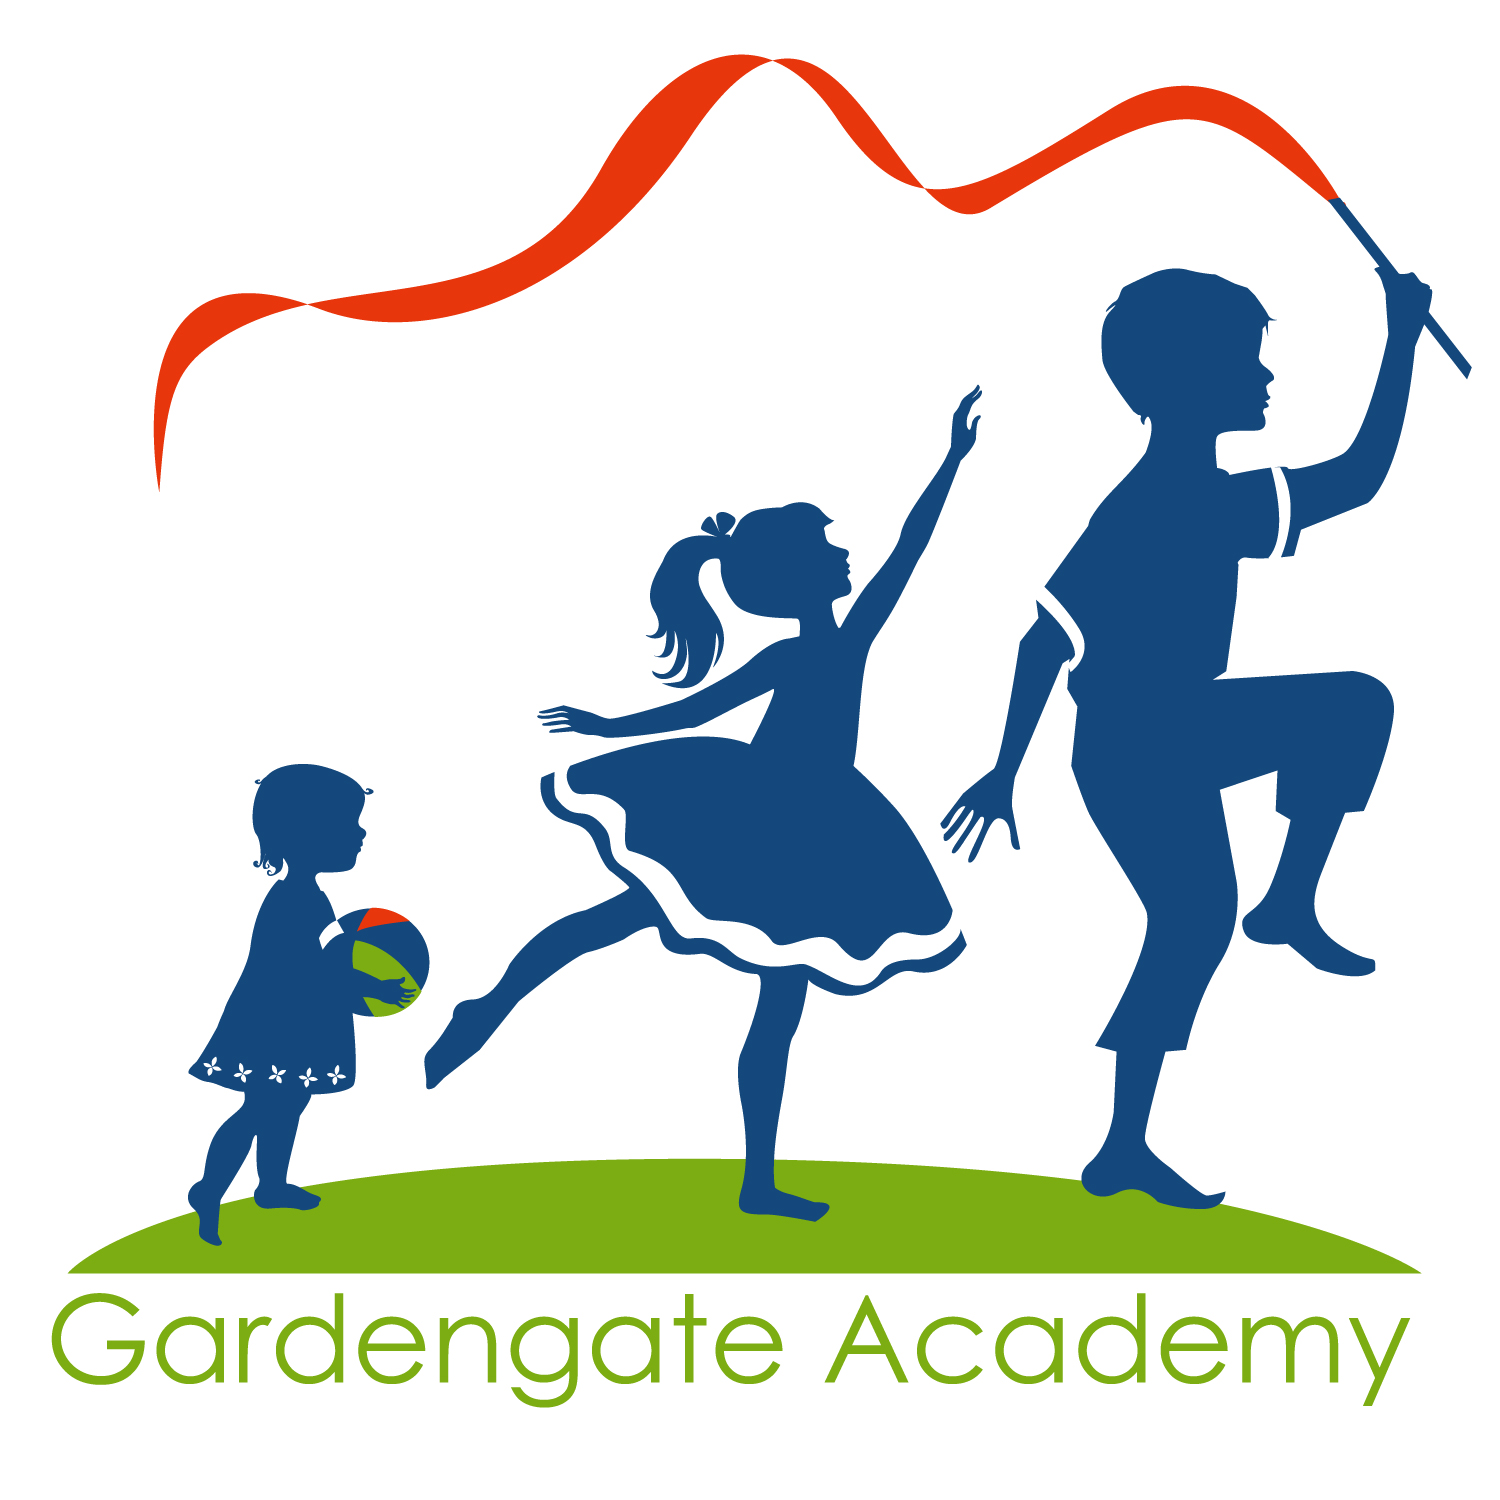 Gardengate Academy